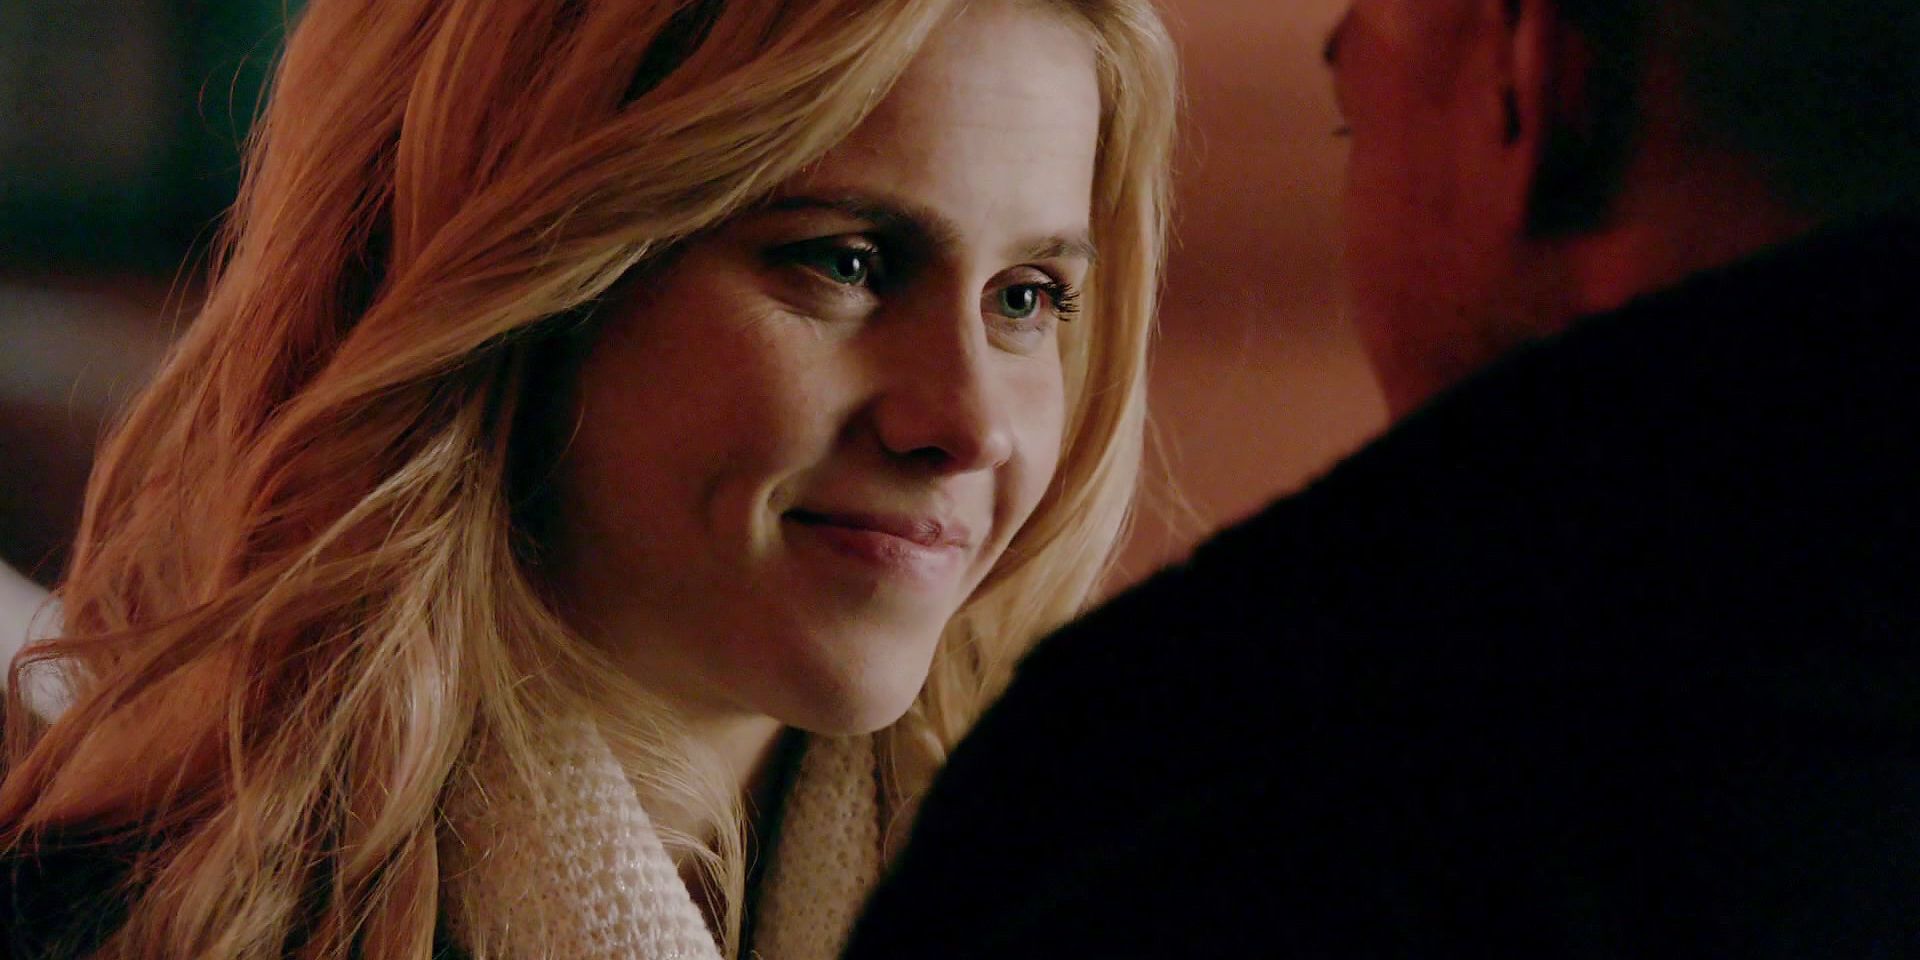 Rebekah dando a Marcel um sorriso caloroso.